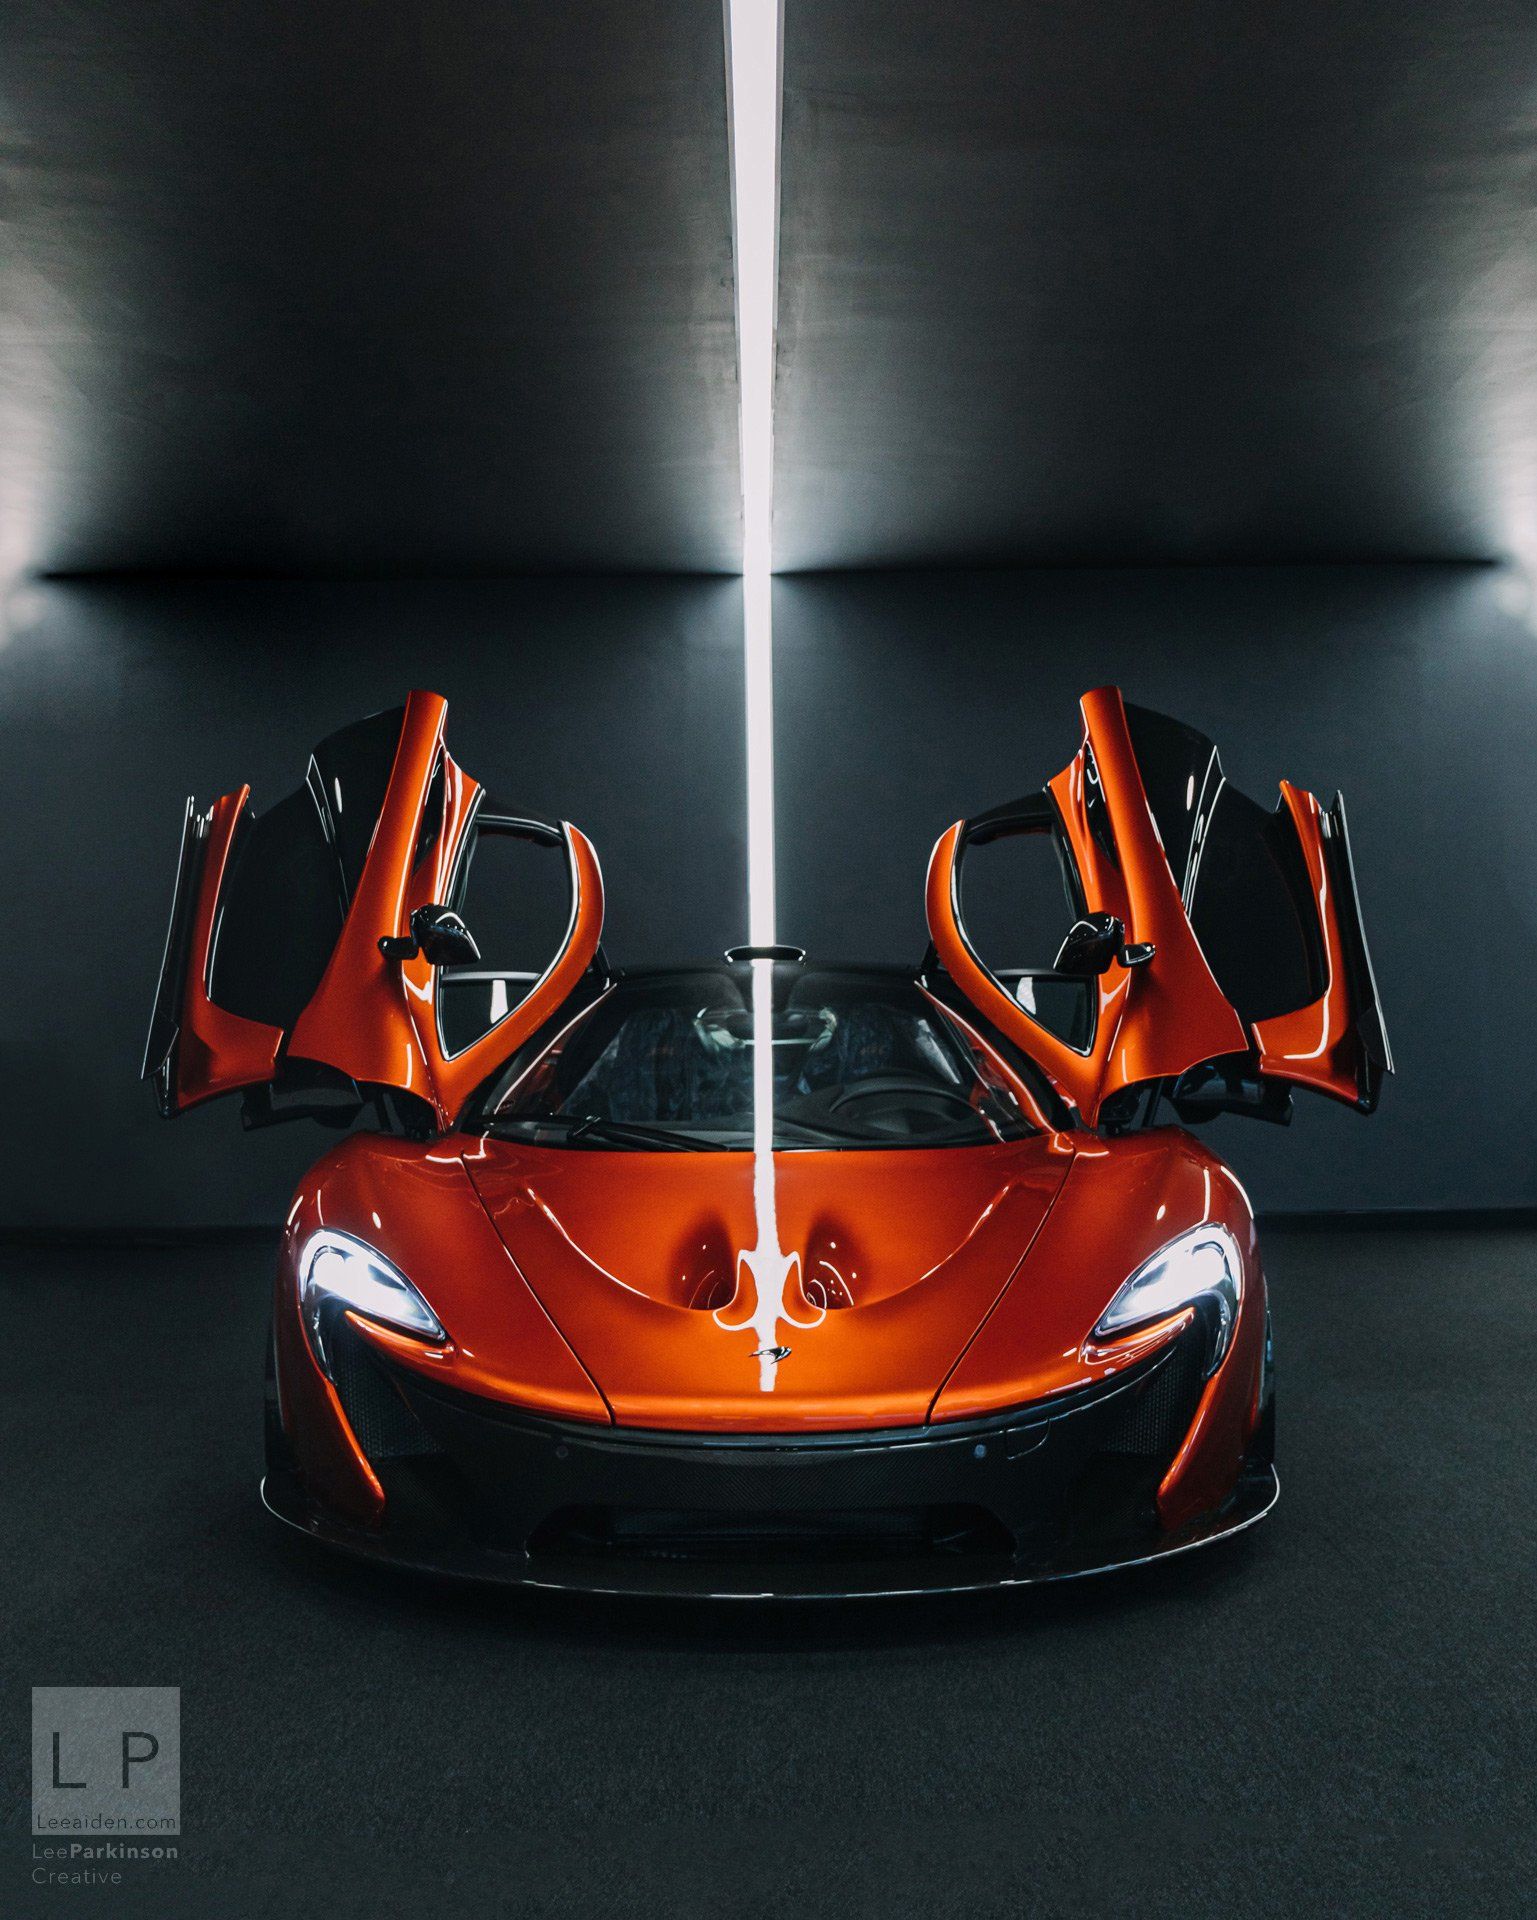 Automotive photographer mclaren p in volcano orange